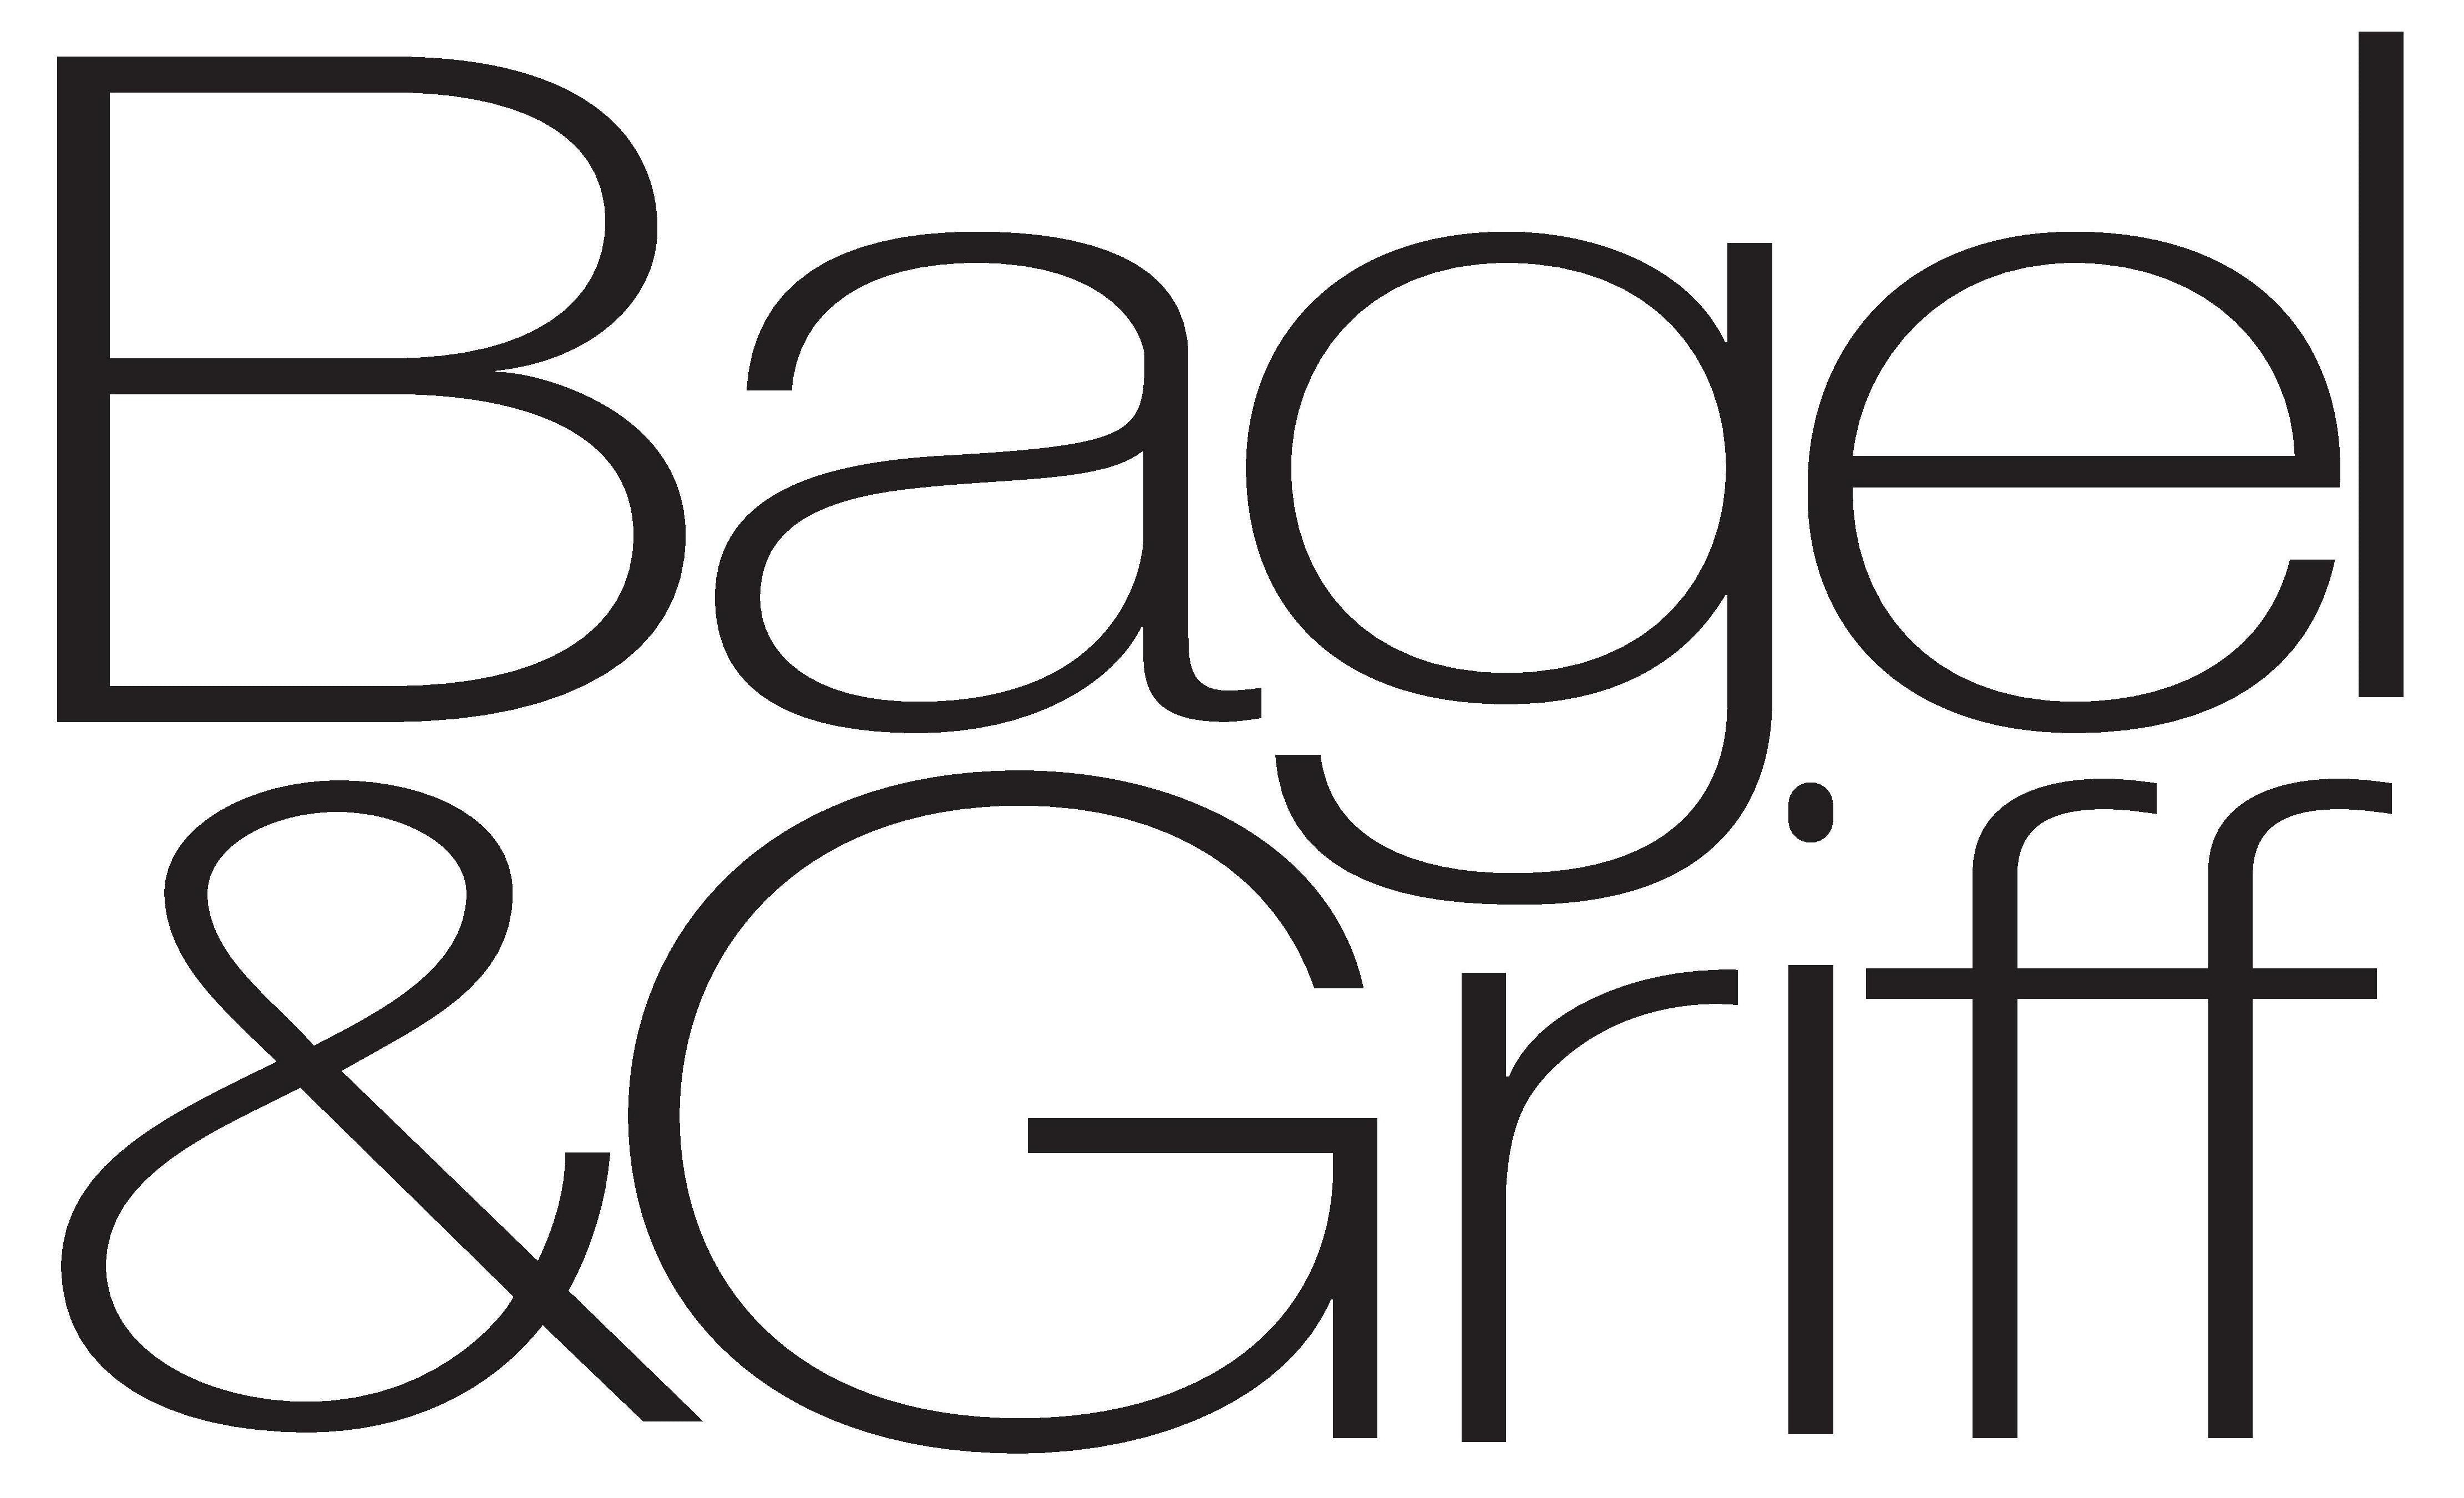 Bagel&Griff